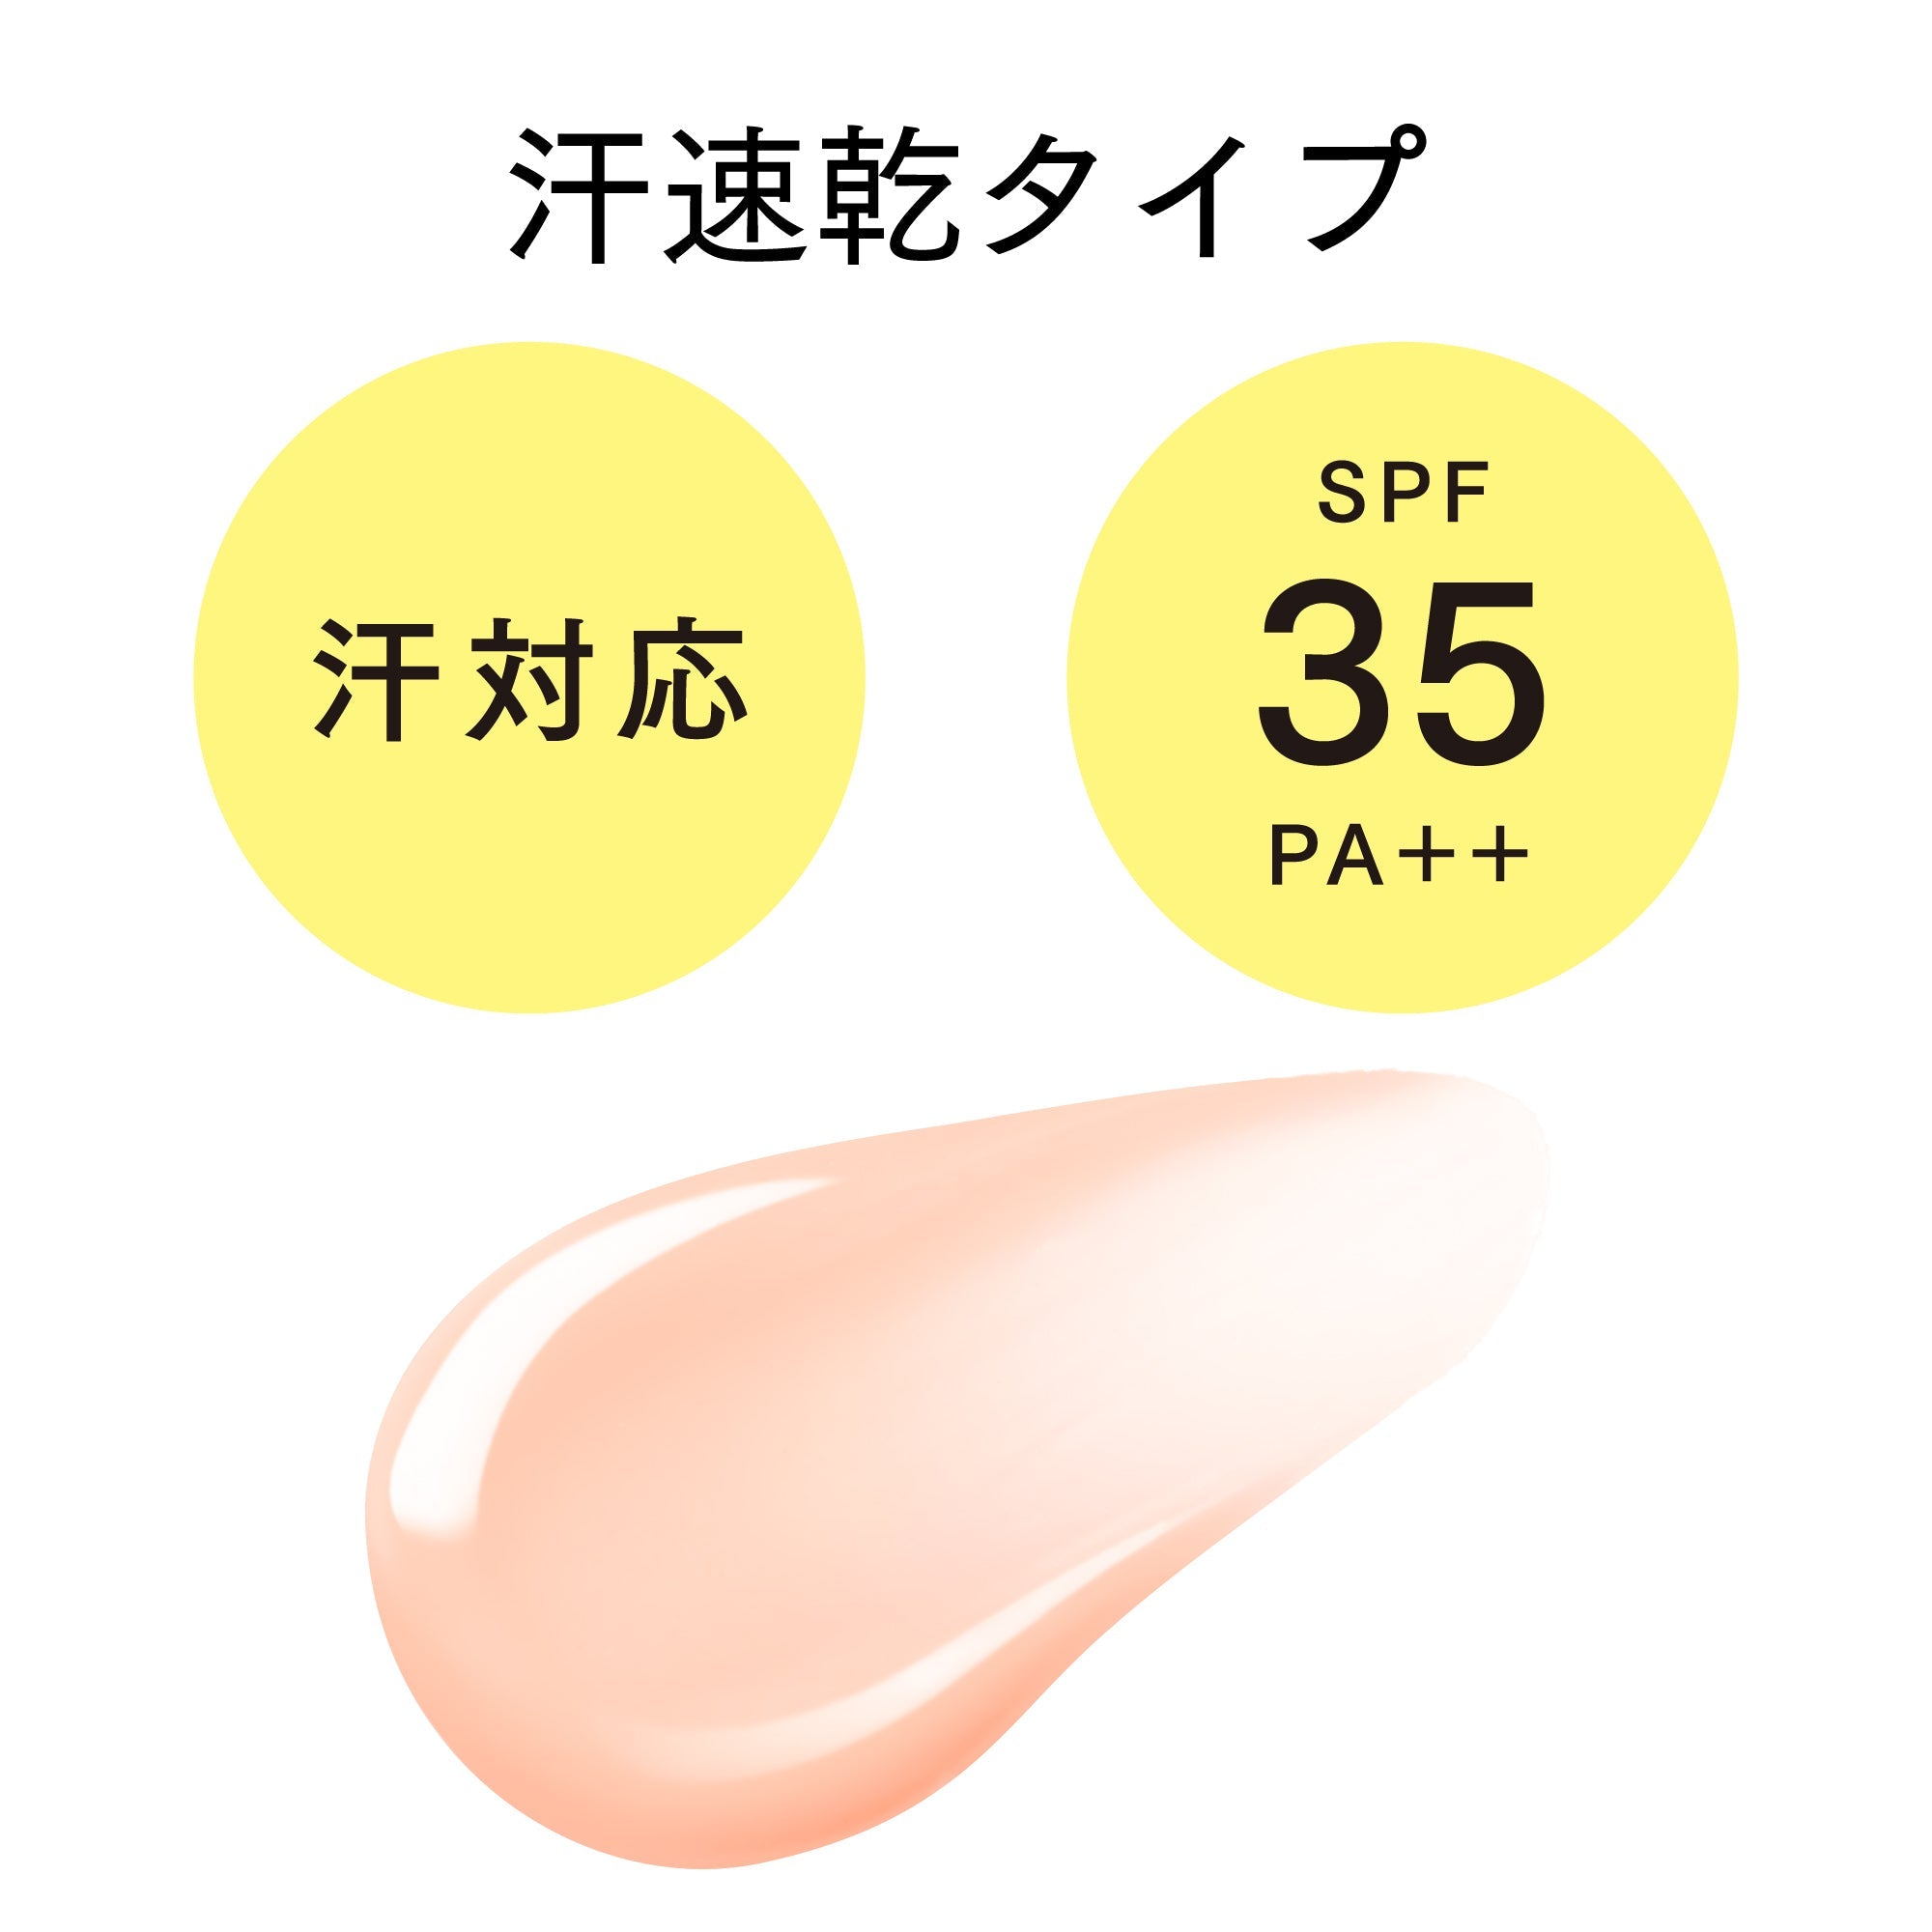 Ettusais Face Edition Skin Base - Ichiban Mart